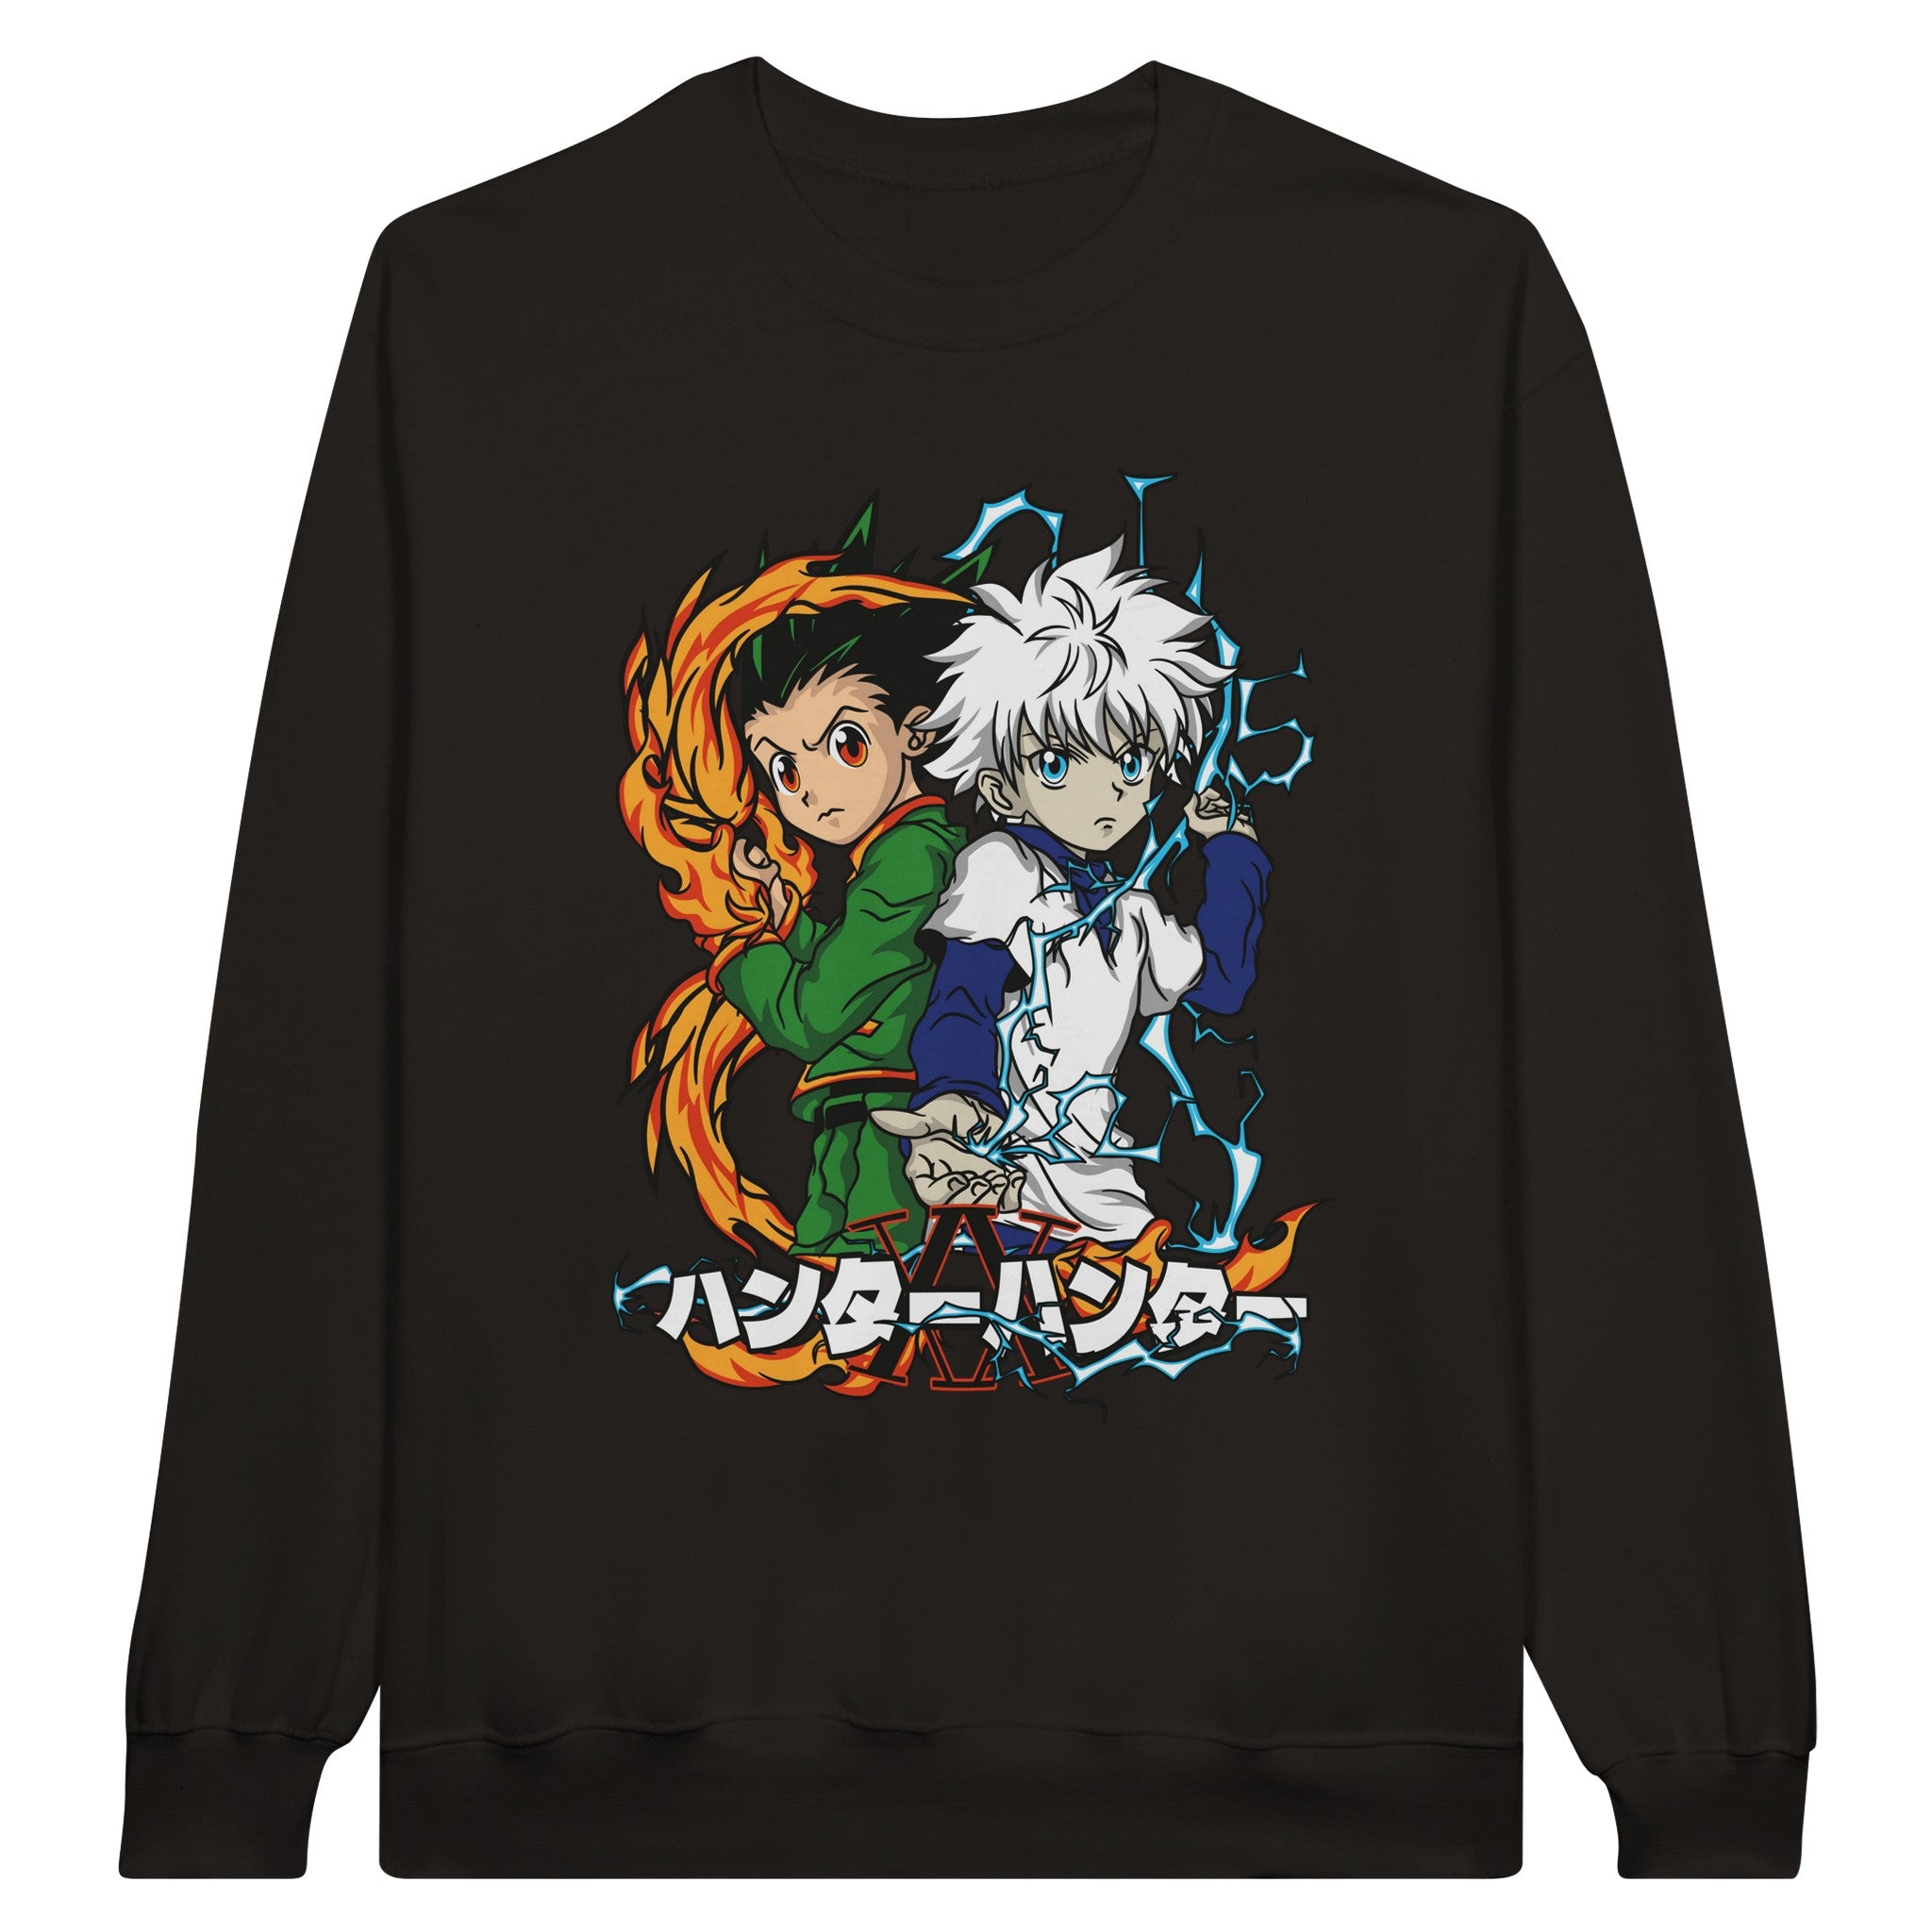 shop and buy hunter x hunter anime clothing gon killua sweatshirt/longsleeve/jumper